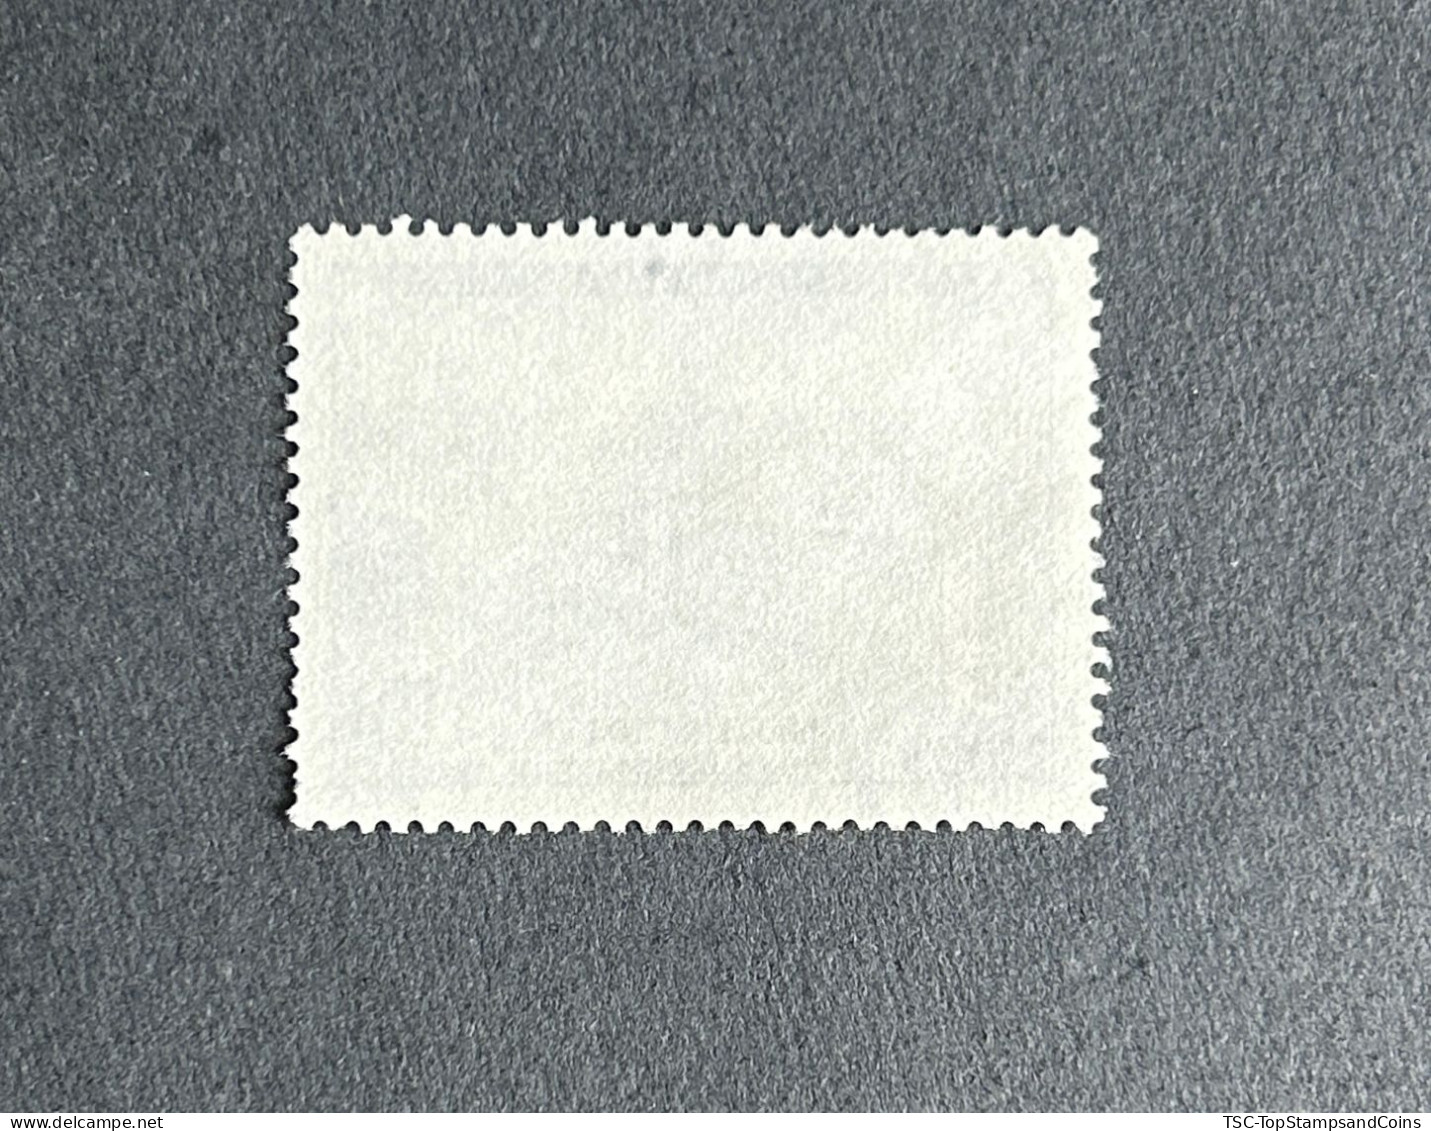 FRAEQ0234U2 - FIDES - Brazzaville Hospital - Middle Congo - 15 F Used Stamp - AEF - 1956 - Gebraucht